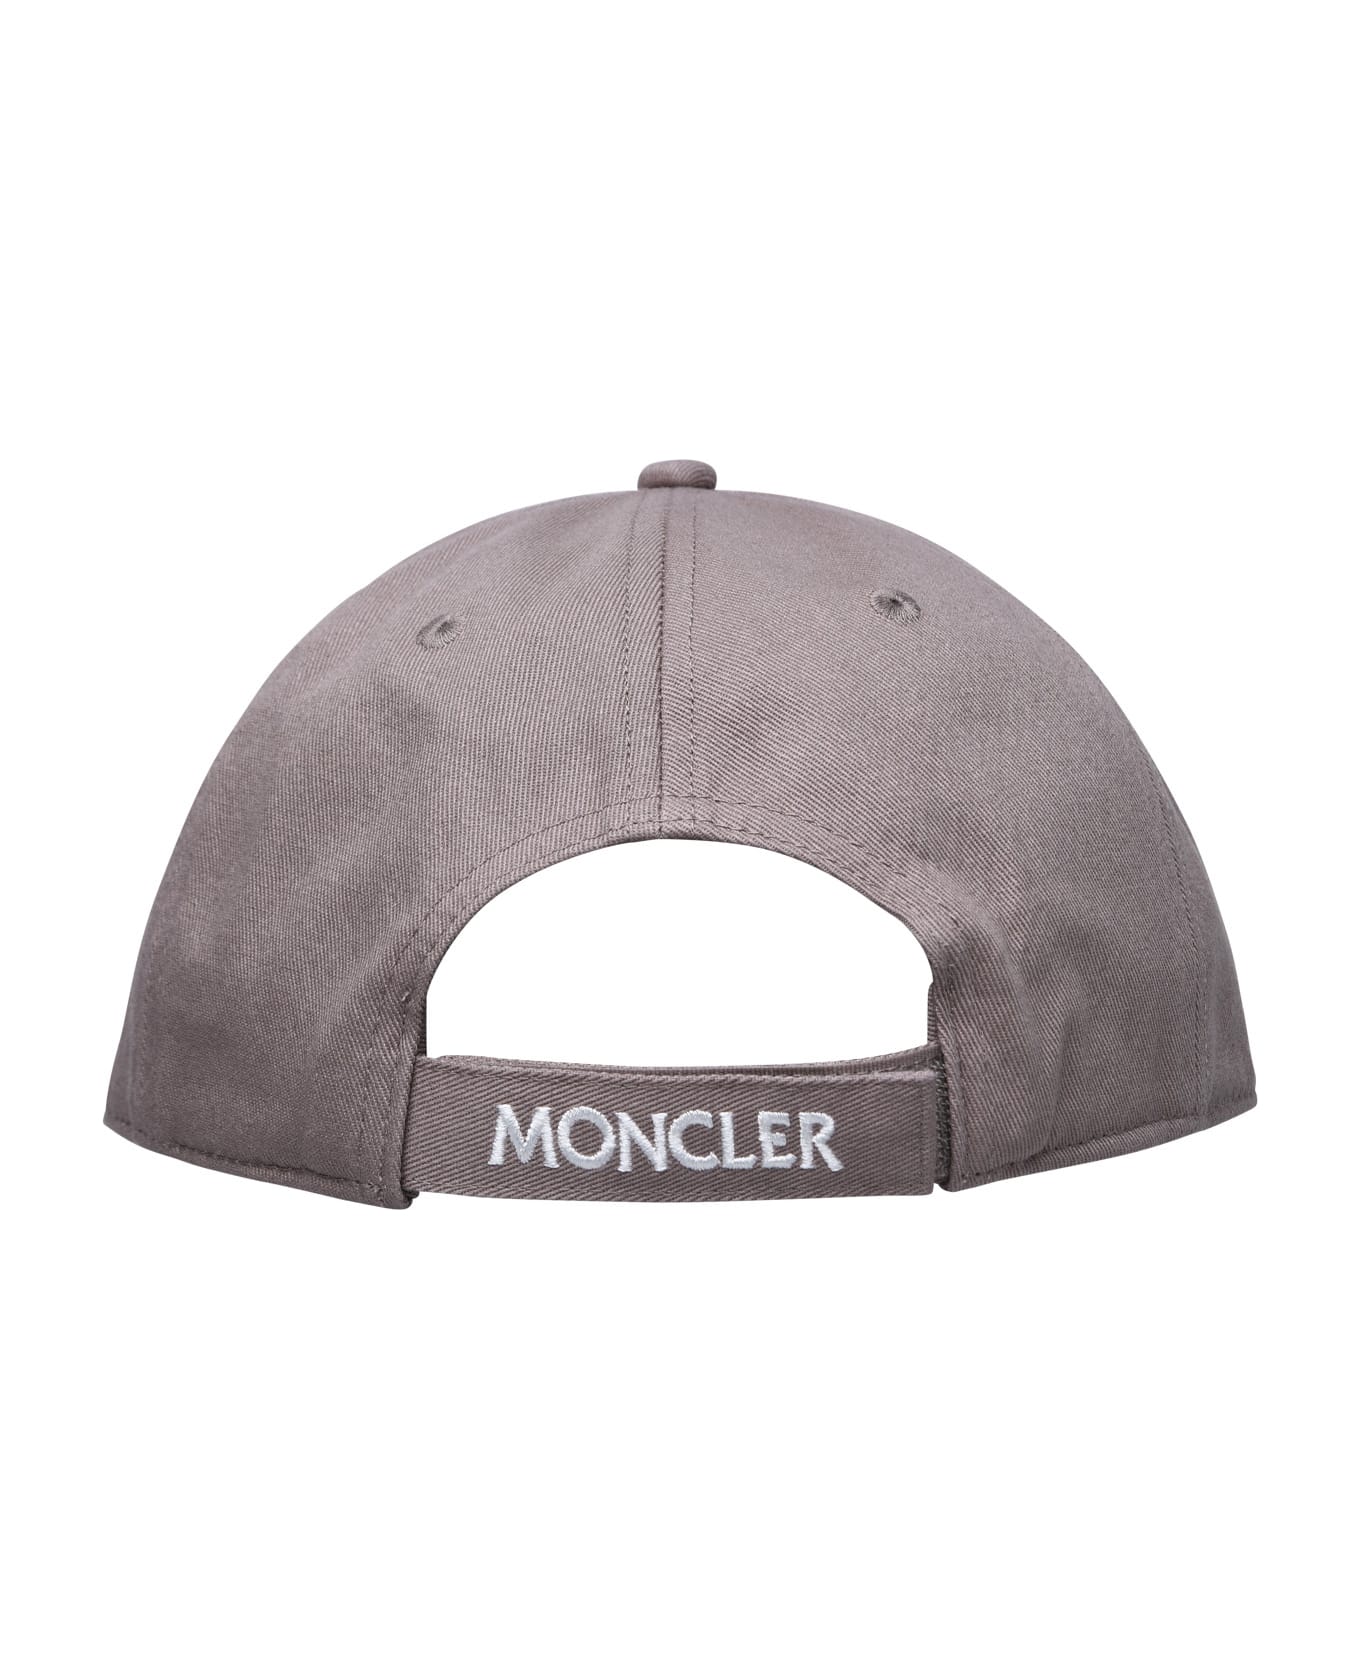 Moncler Beige Cotton Hat - Beige